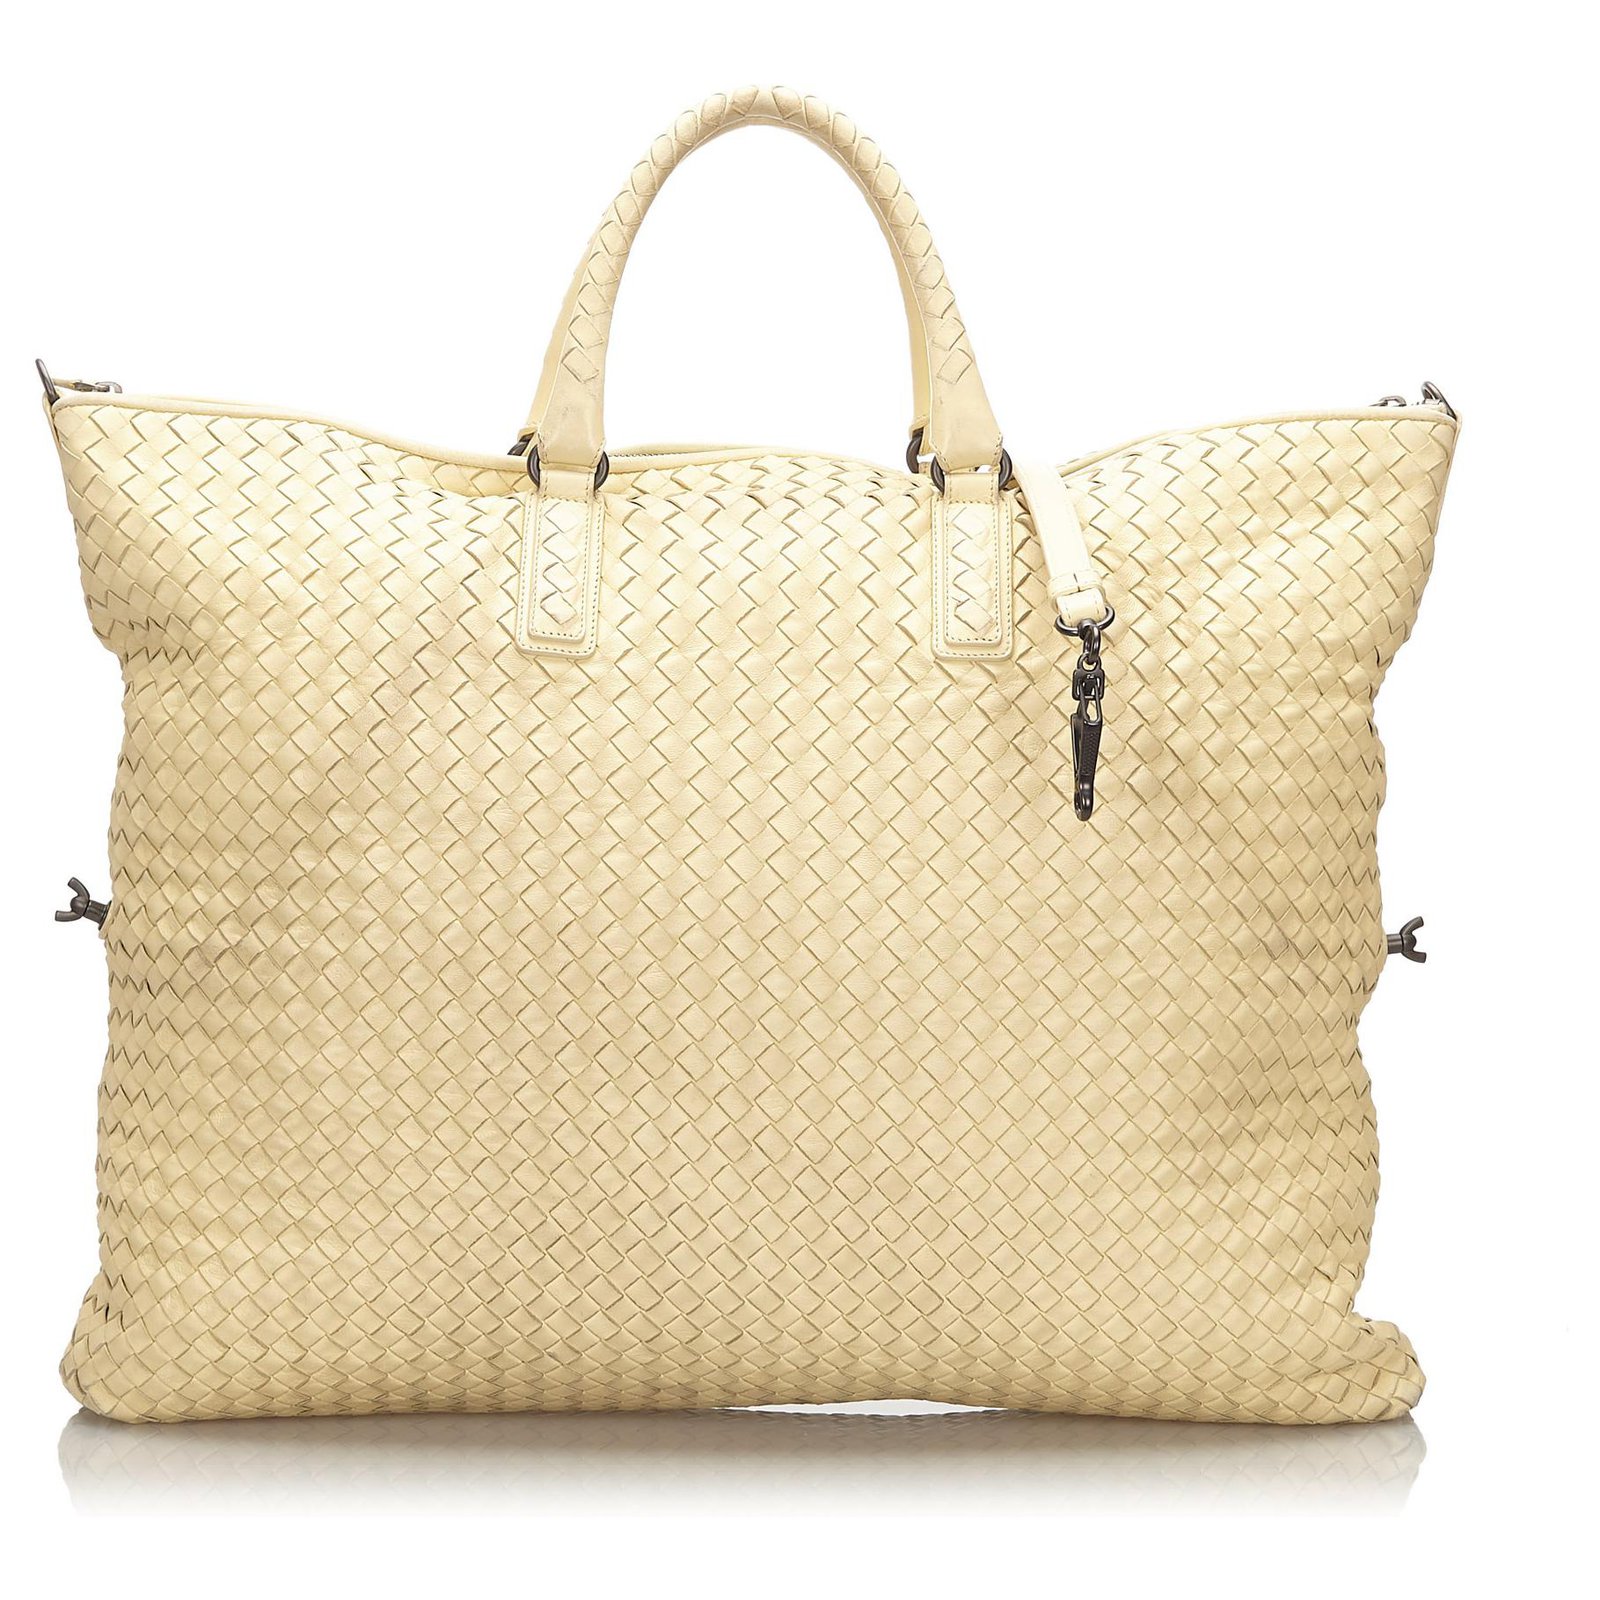 Bottega Veneta Ladies Intrecciato Weave Tote Bag